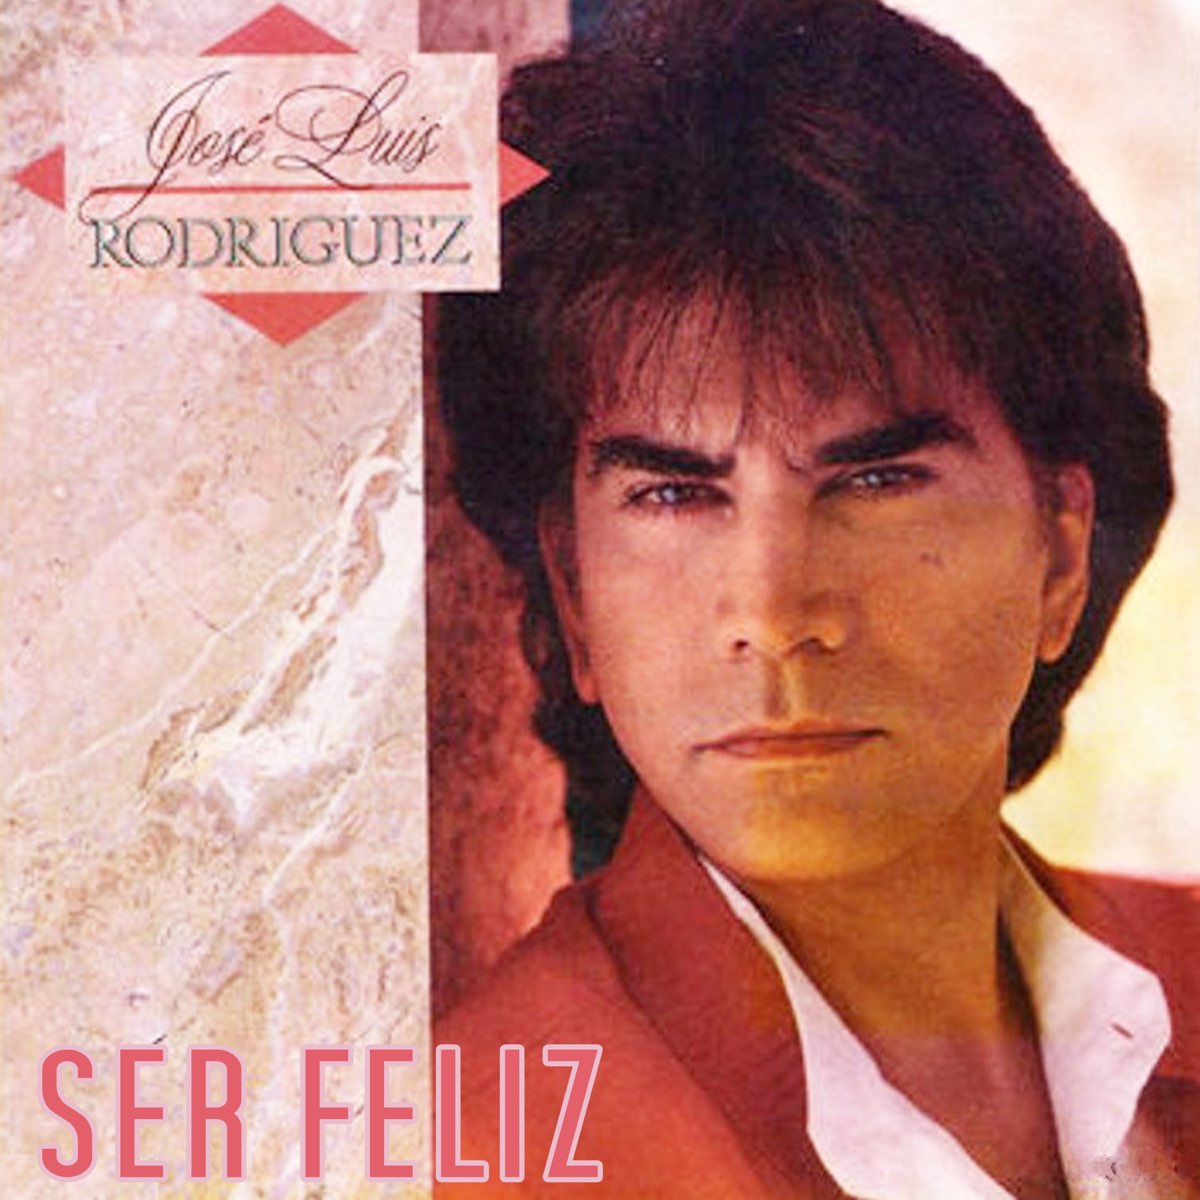 Ser Feliz - Album by José Luis Rodríguez - Apple Music